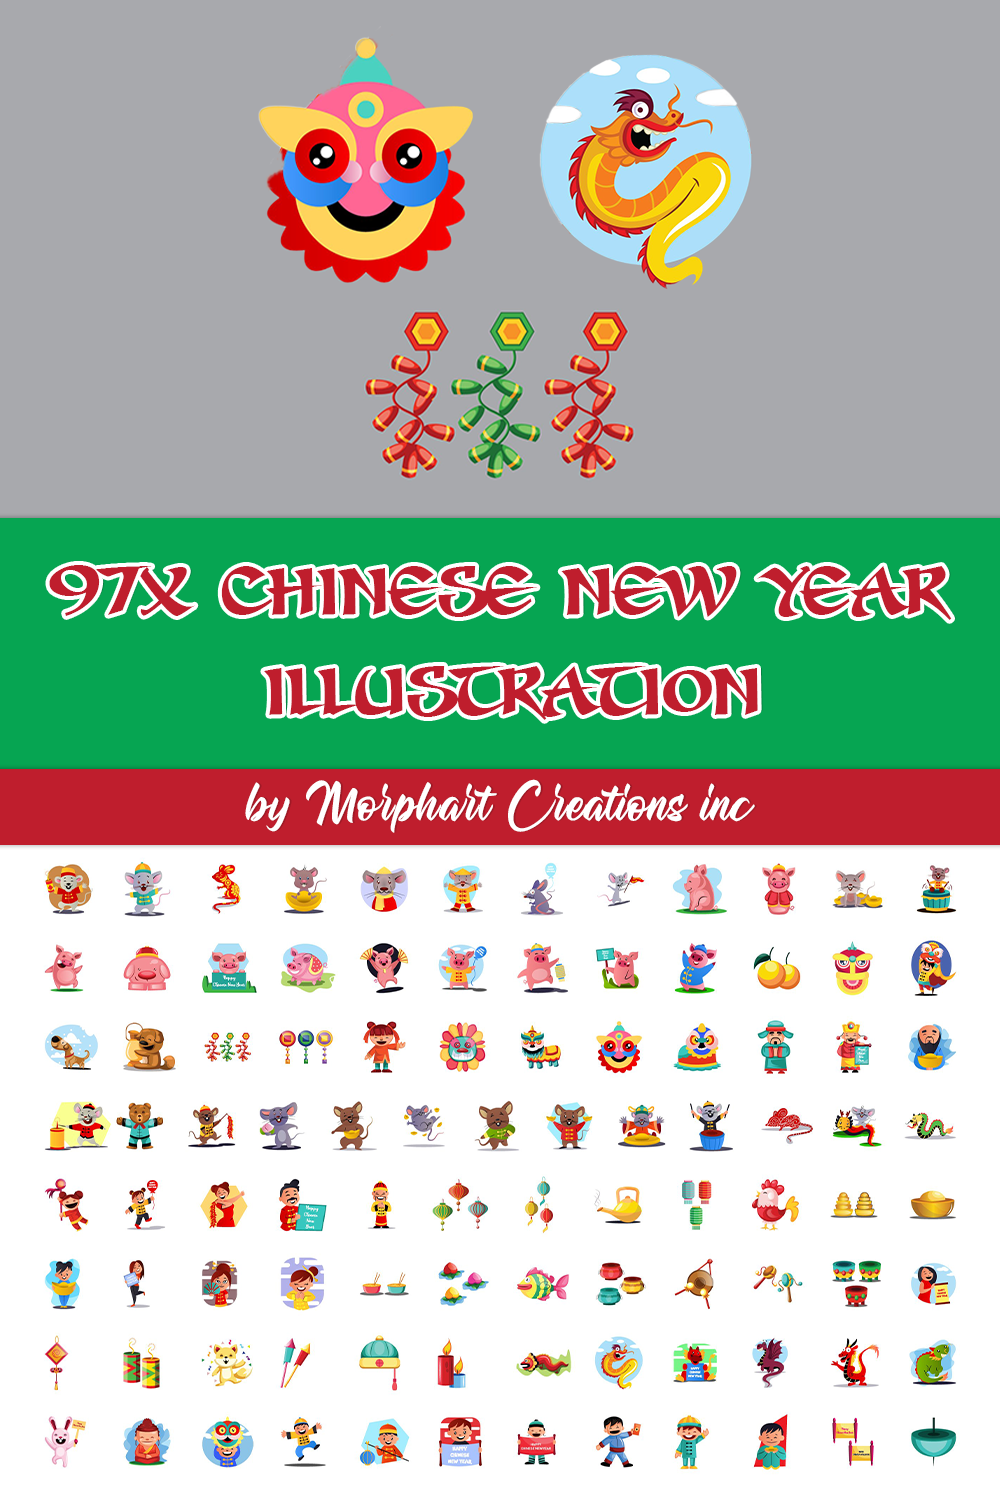 Chinese new year illustration of pinterest.